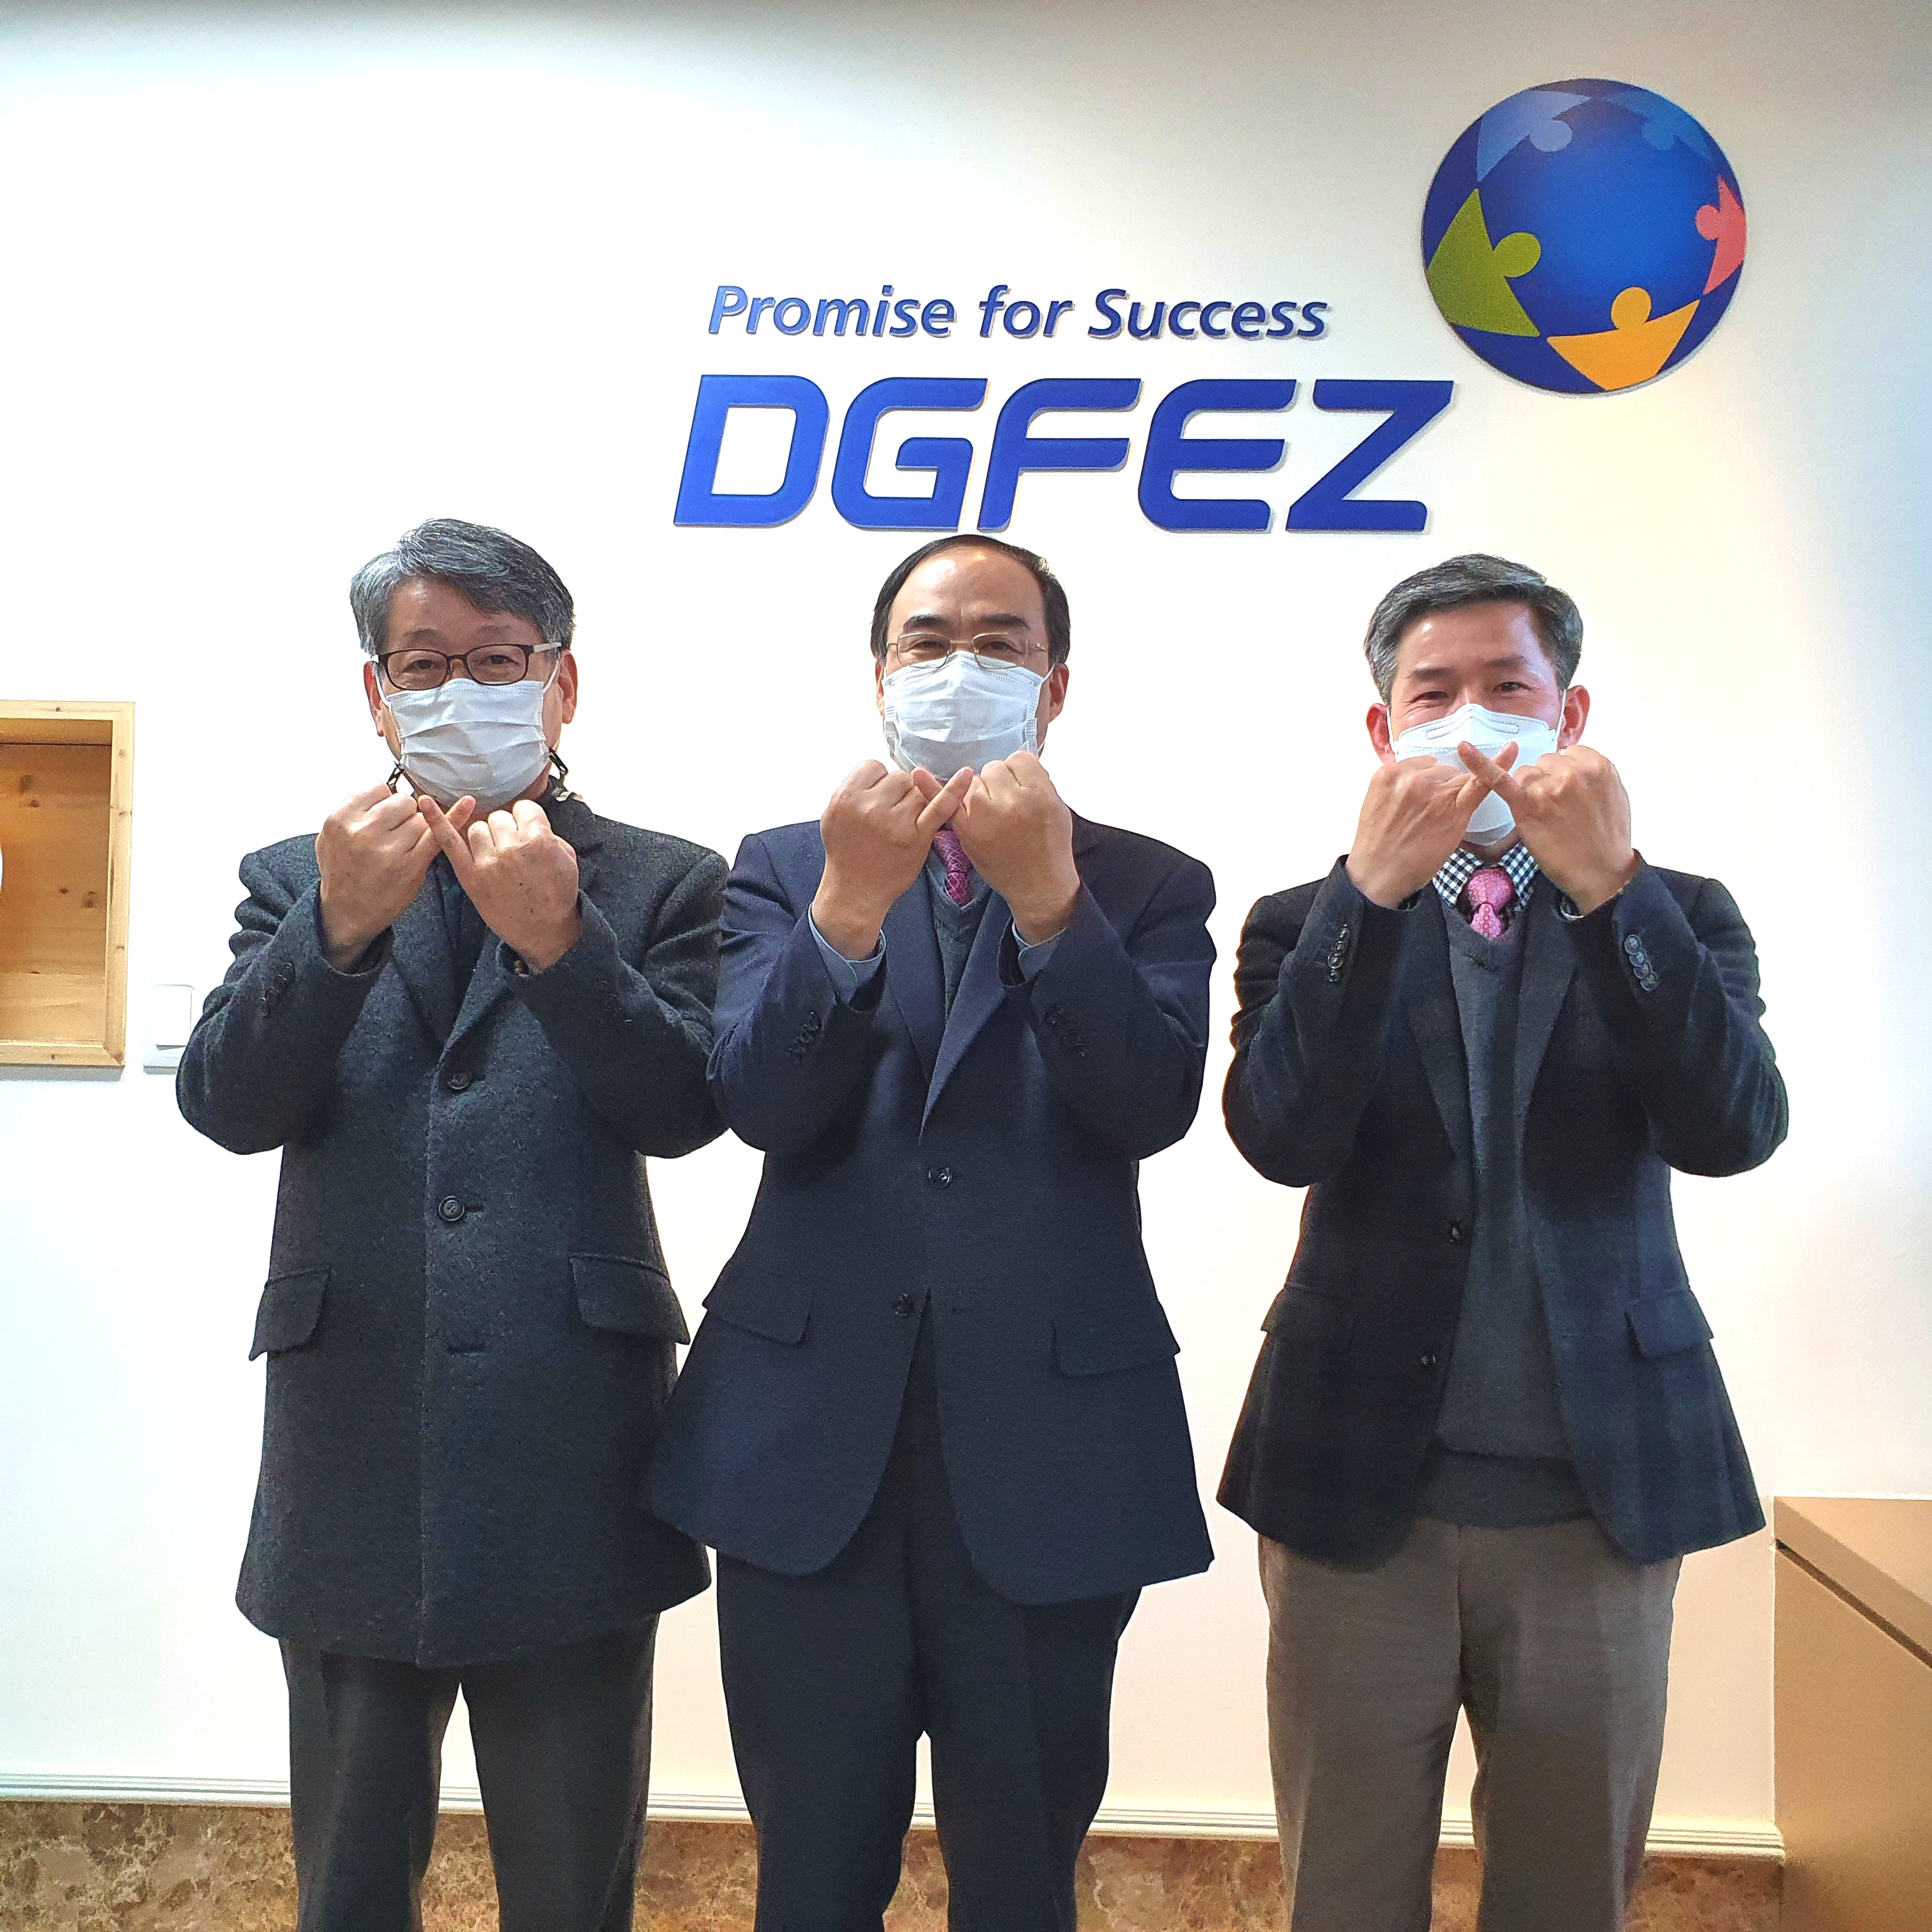 DGFEZ participates in social media campaigns